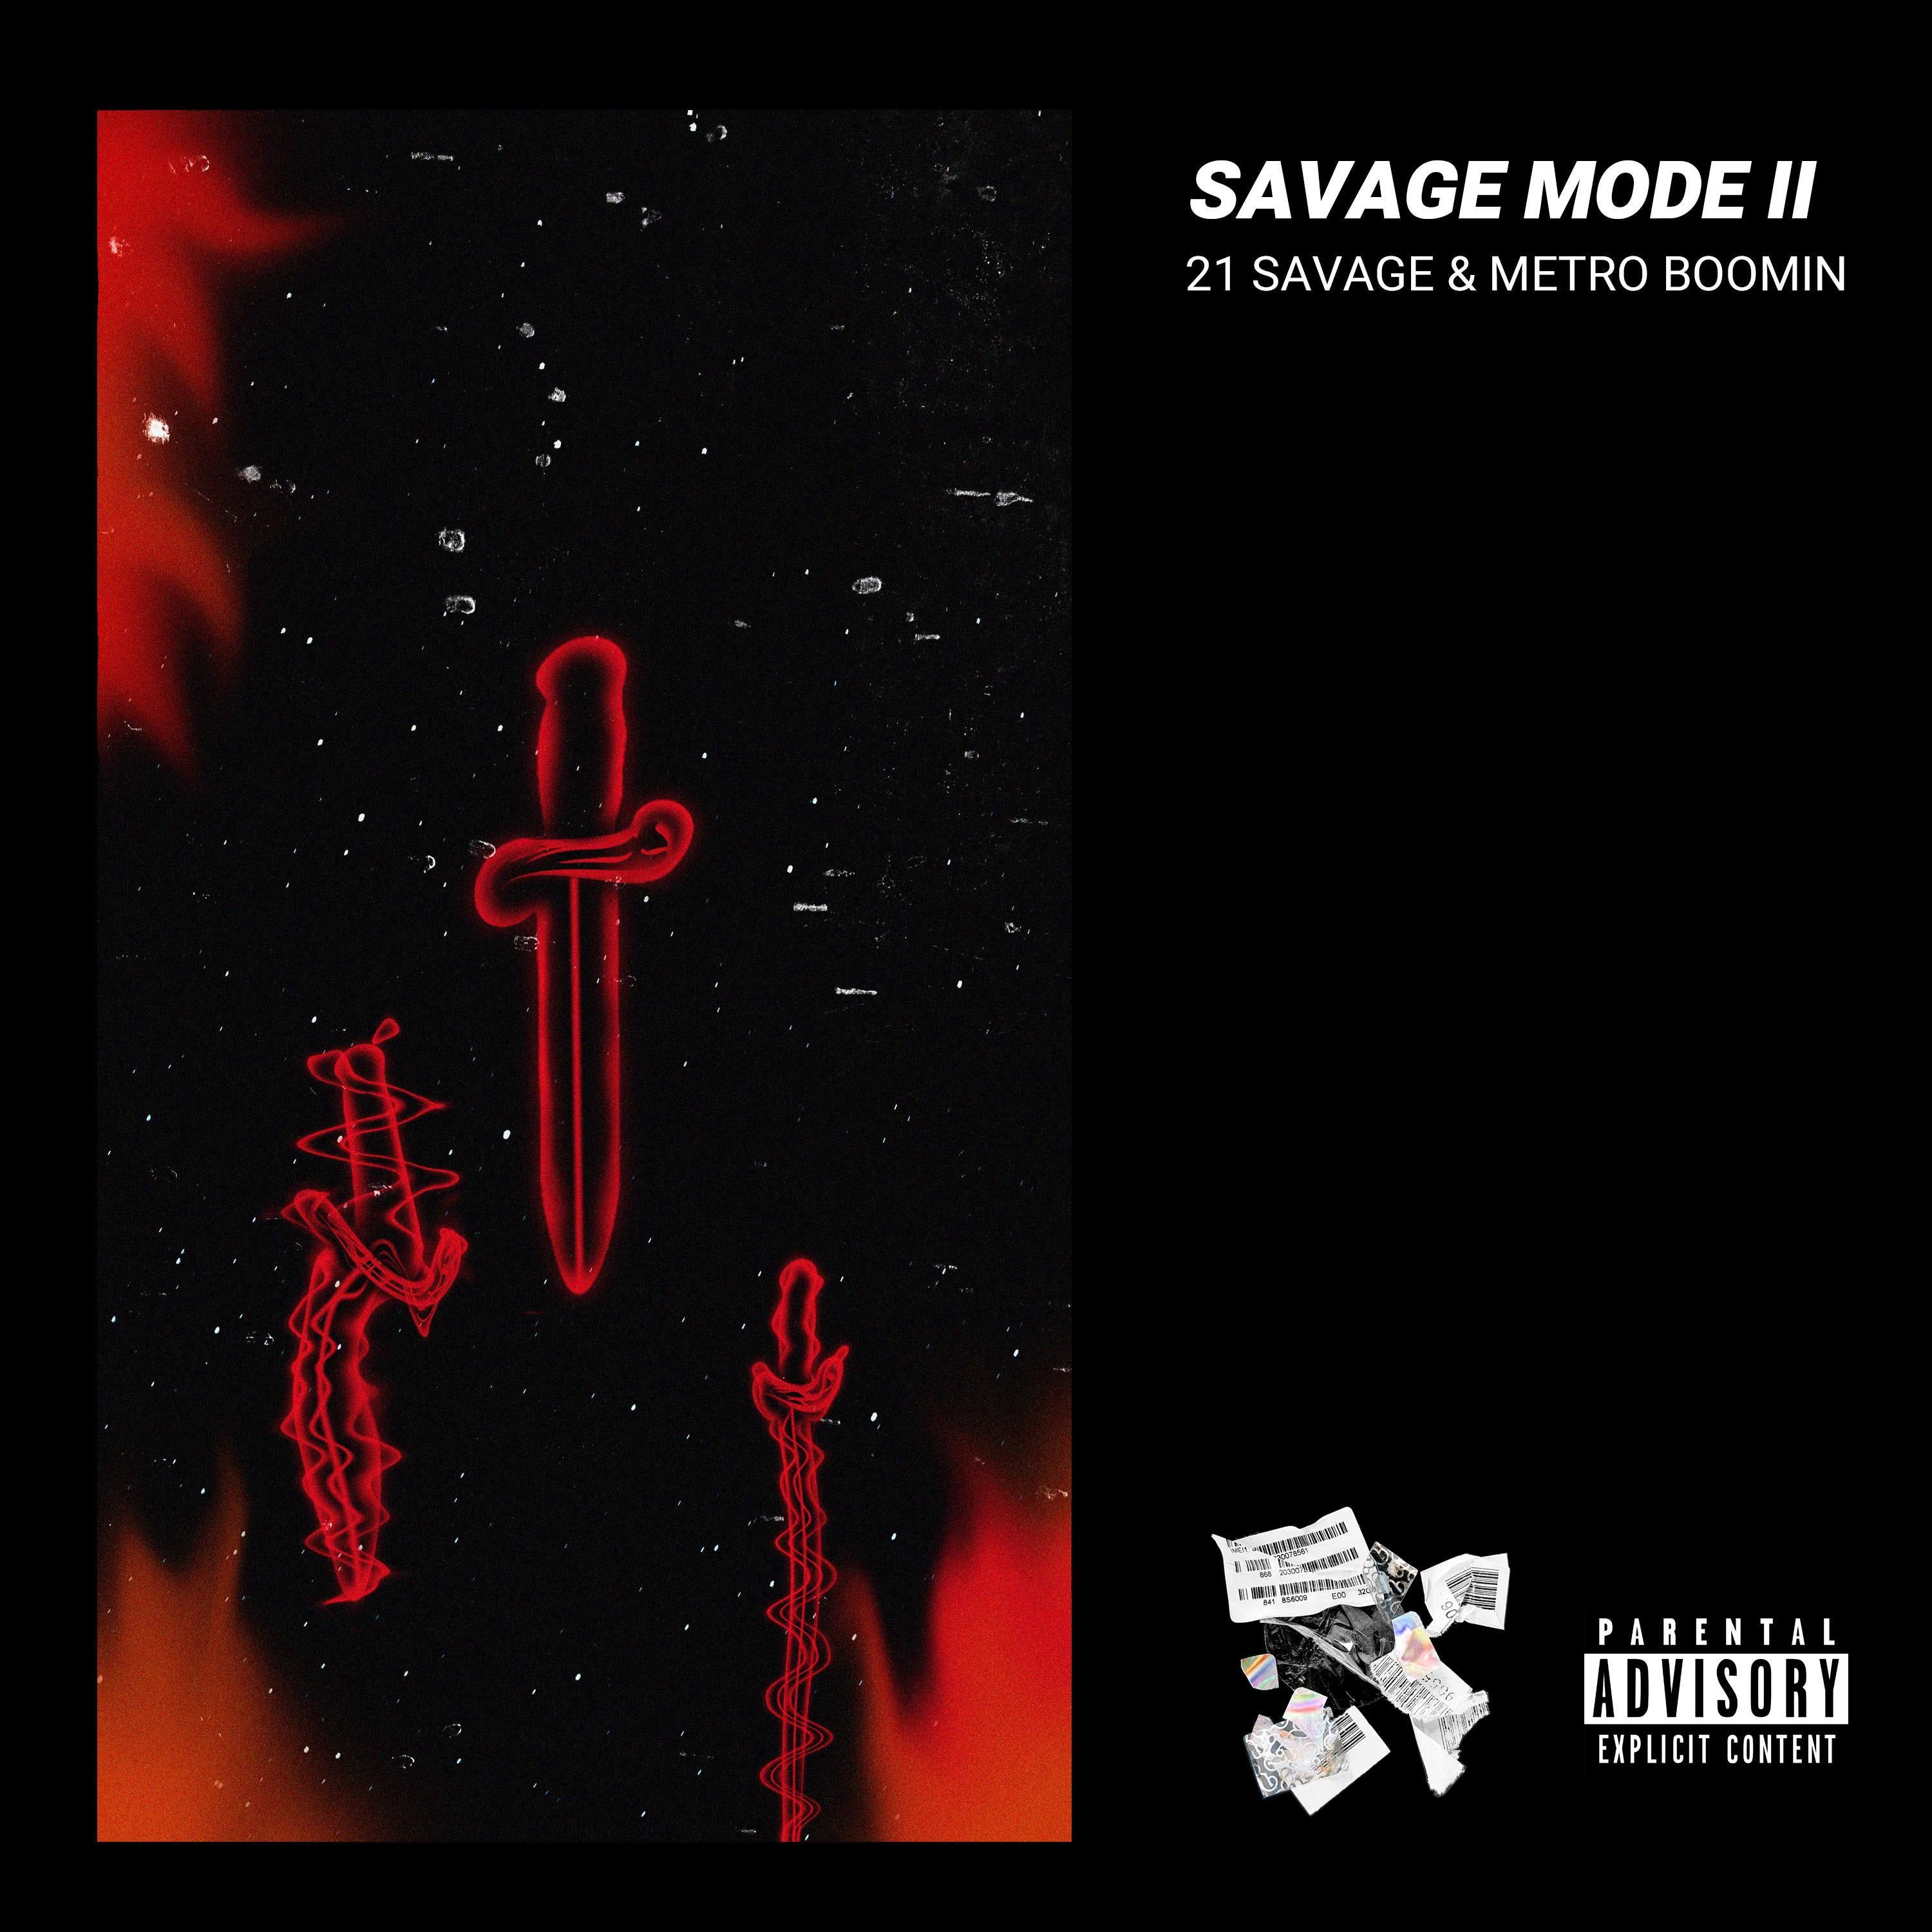 Savage Mode II fan cover and wallpaper version. ig: @ervldd